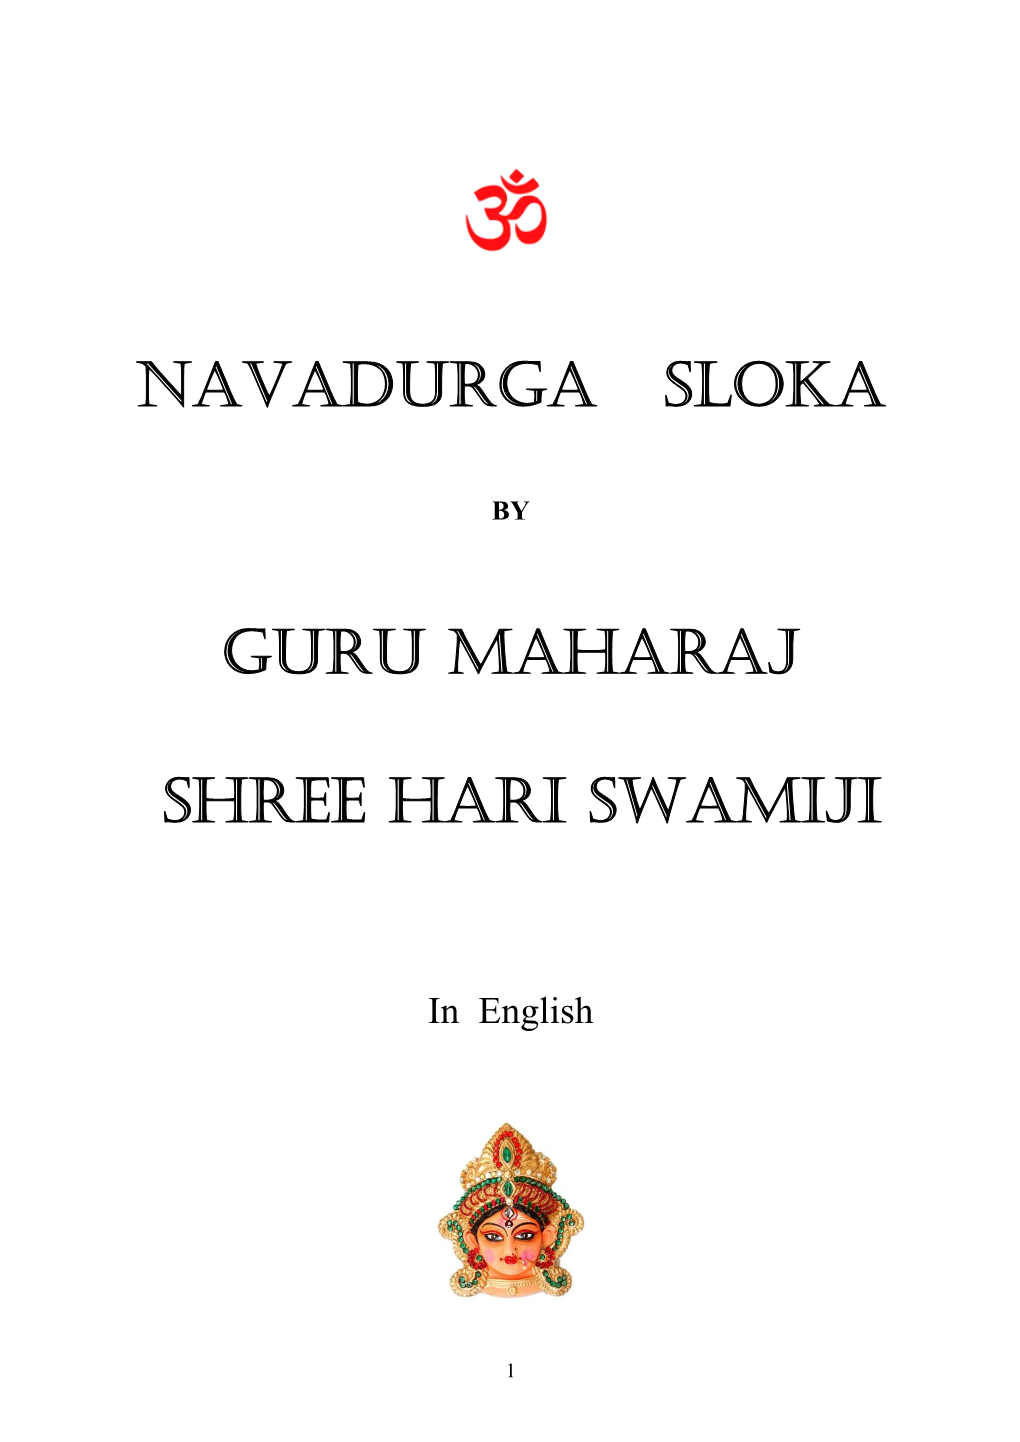 Navadurga Sloka Guru Maharaj Shree Hari Swamiji